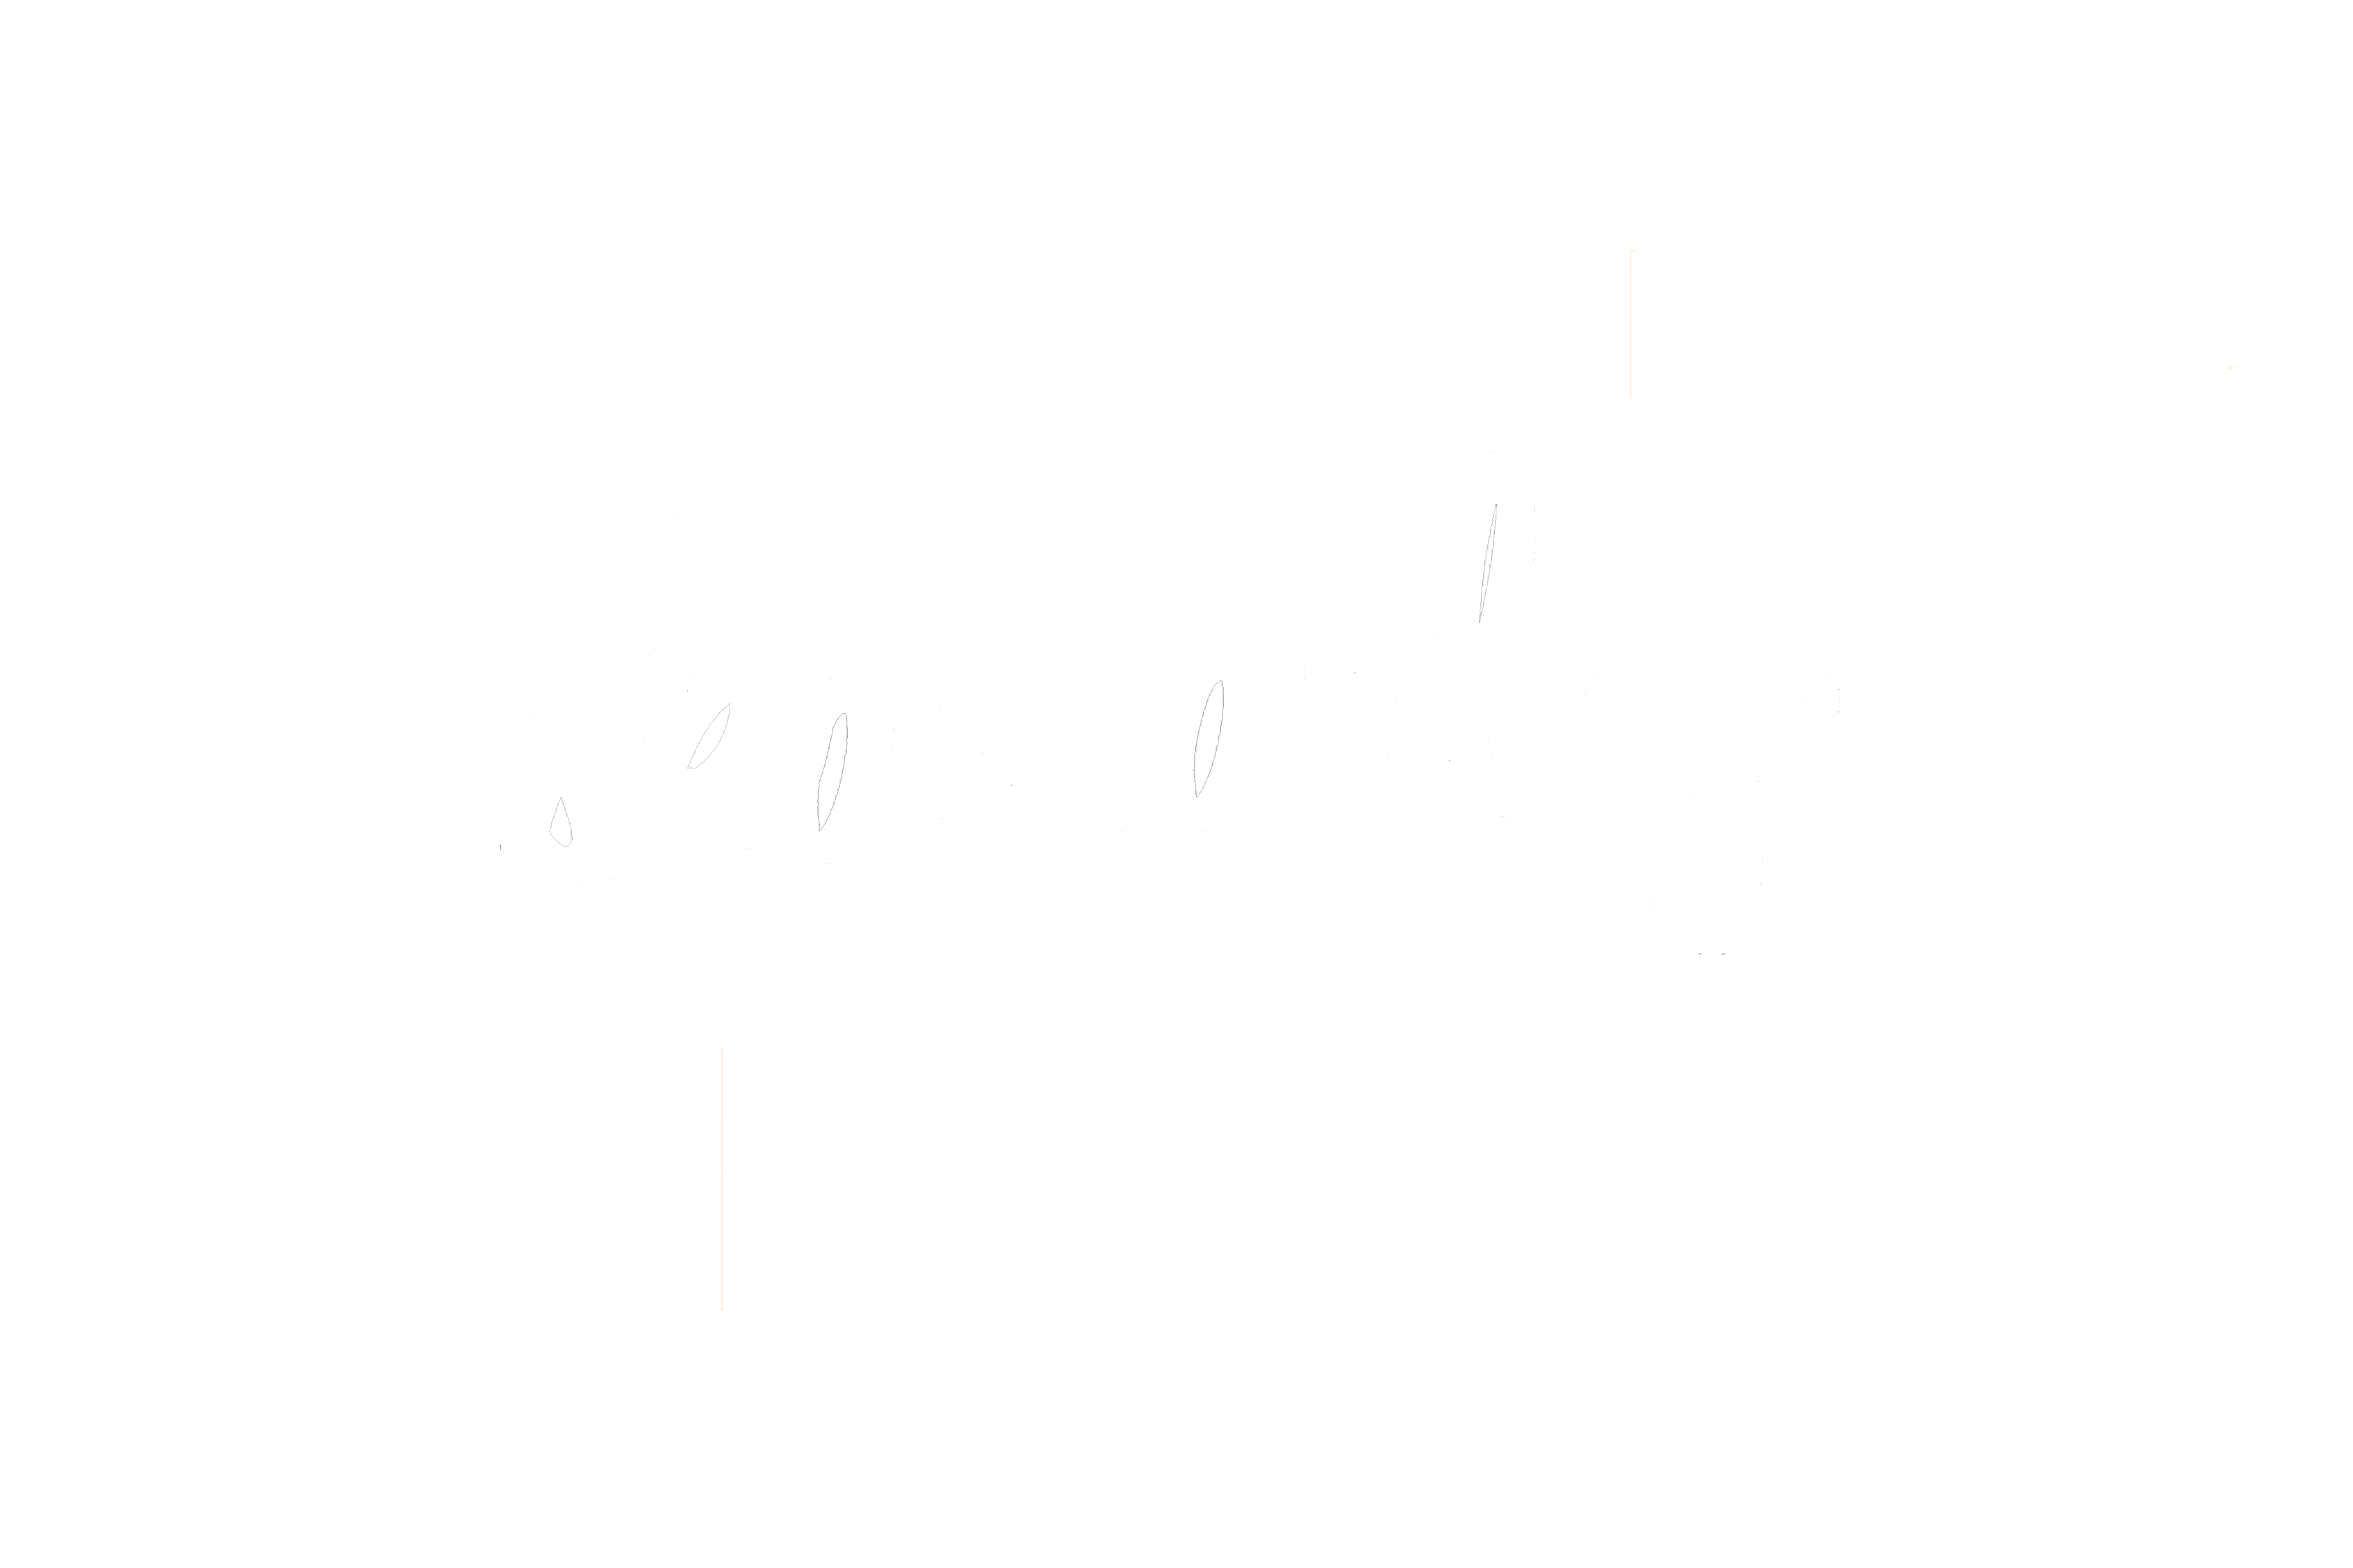 Skamarley